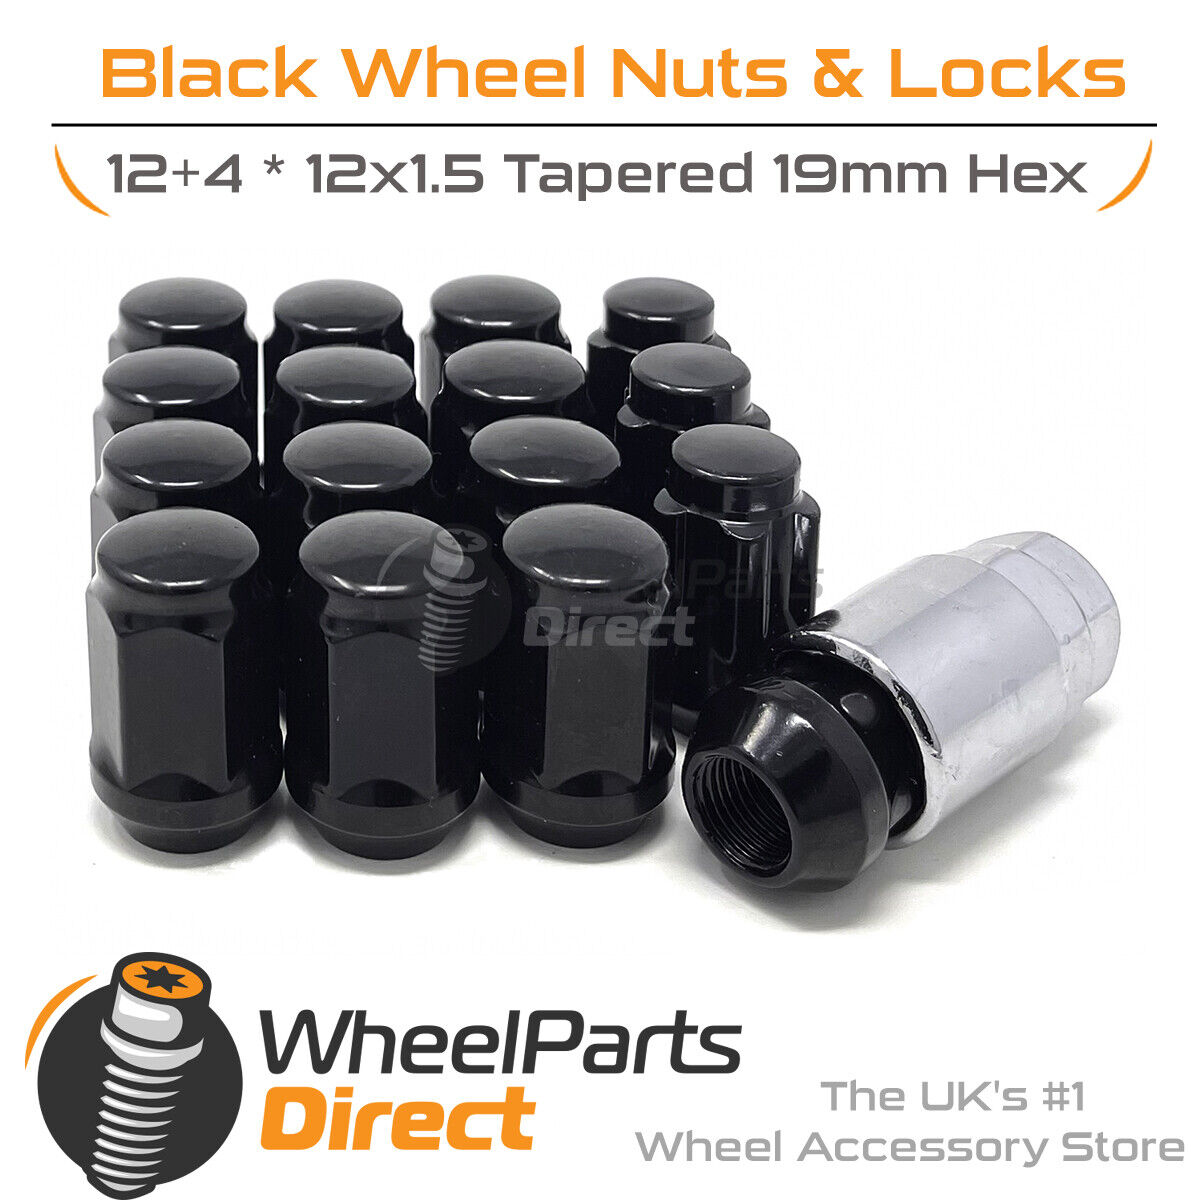 Wheel Nuts & Locks (12+4) Black for Proton Impian 00-11 on Aftermarket Wheels